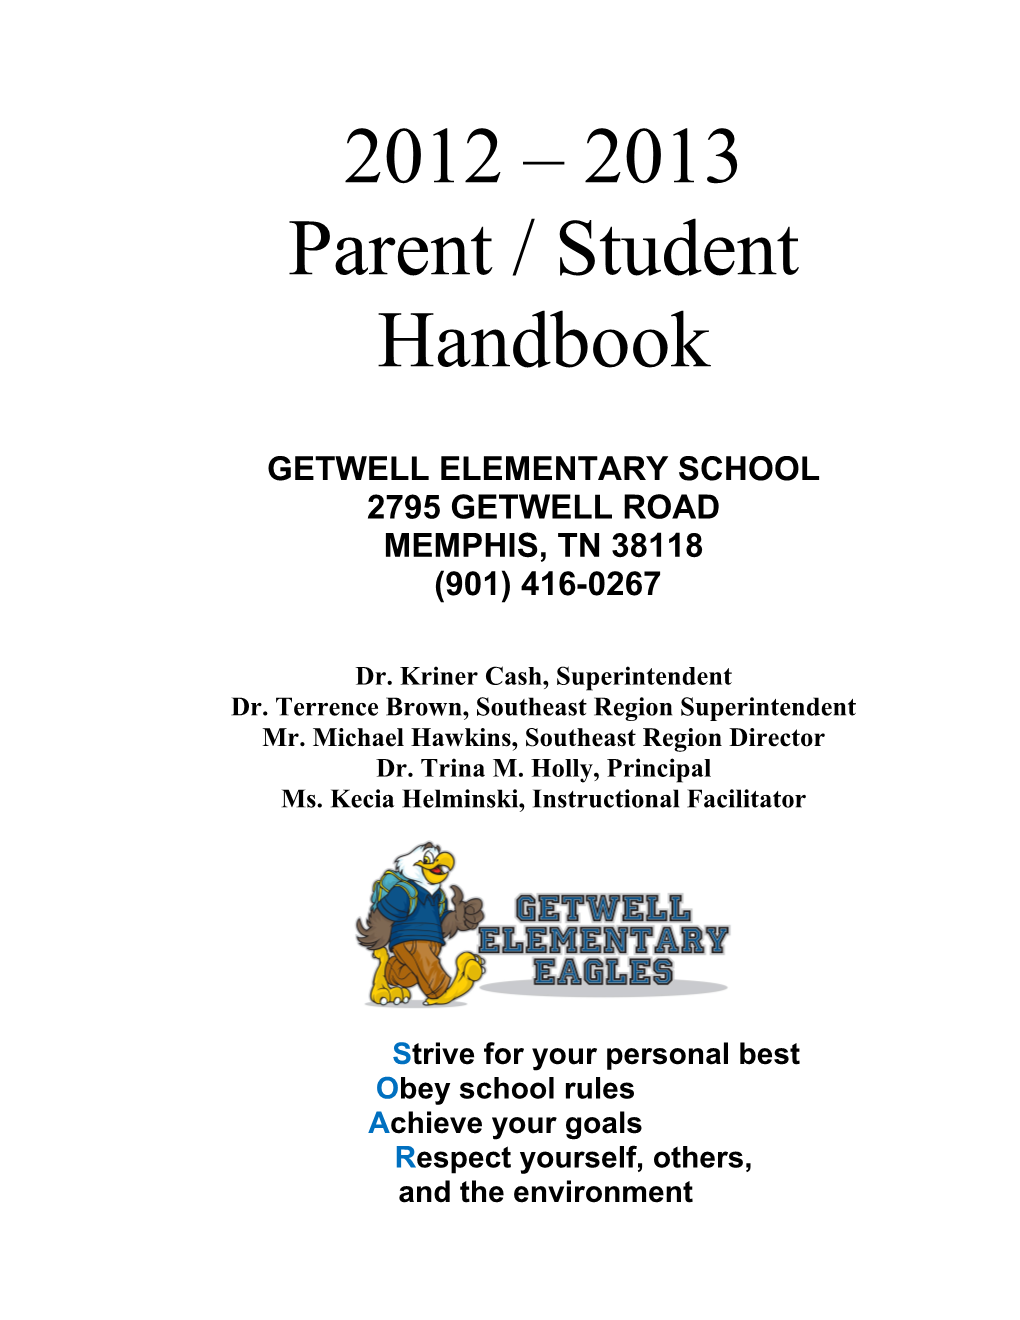 Getwell Elementary School 2795 Getwell Road